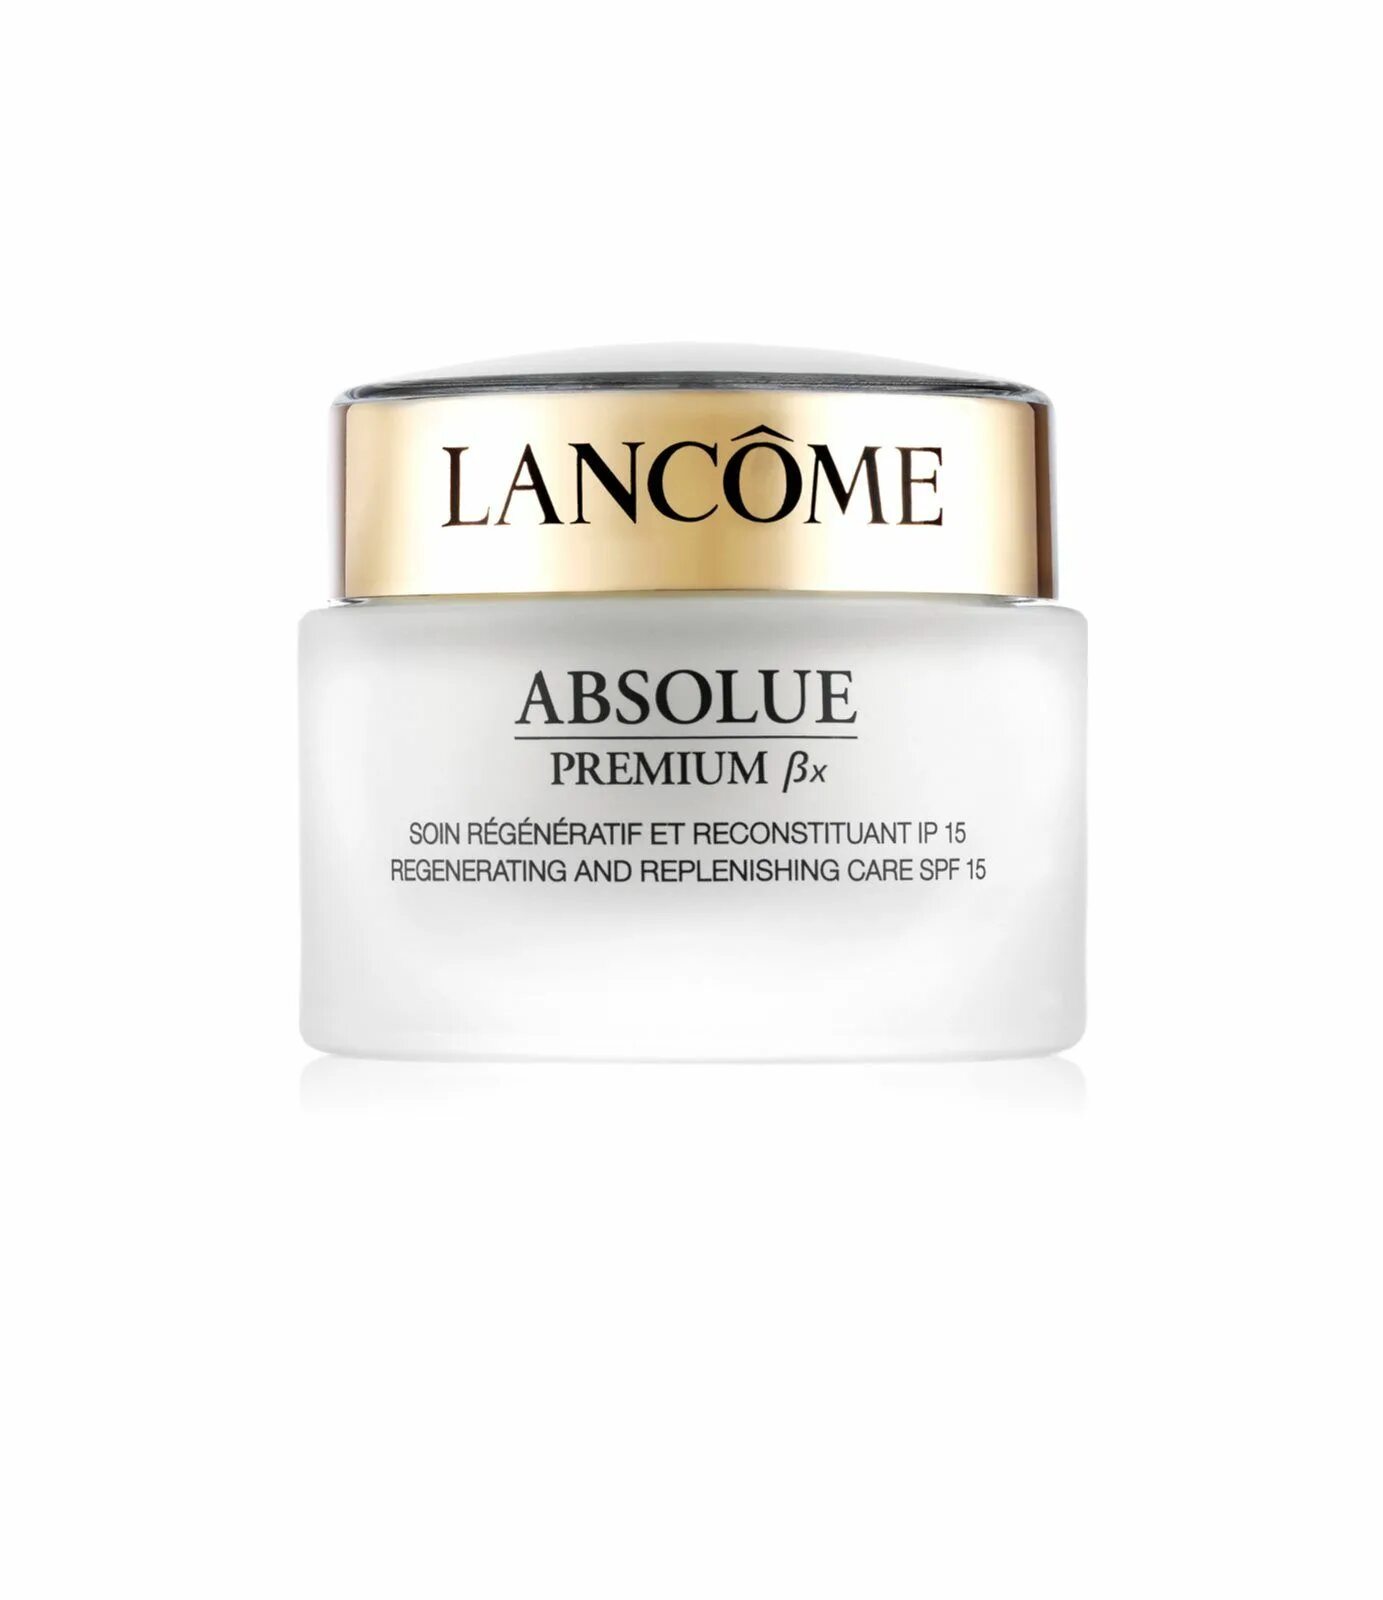 Крем Lancome Absolue Premium BX ночной 75 мл. Lancome Absolue Premium 50. Крем Lancome Absolue Premium BX дневной 50 мл. Lancome Absolue precious. Купить крем lancome